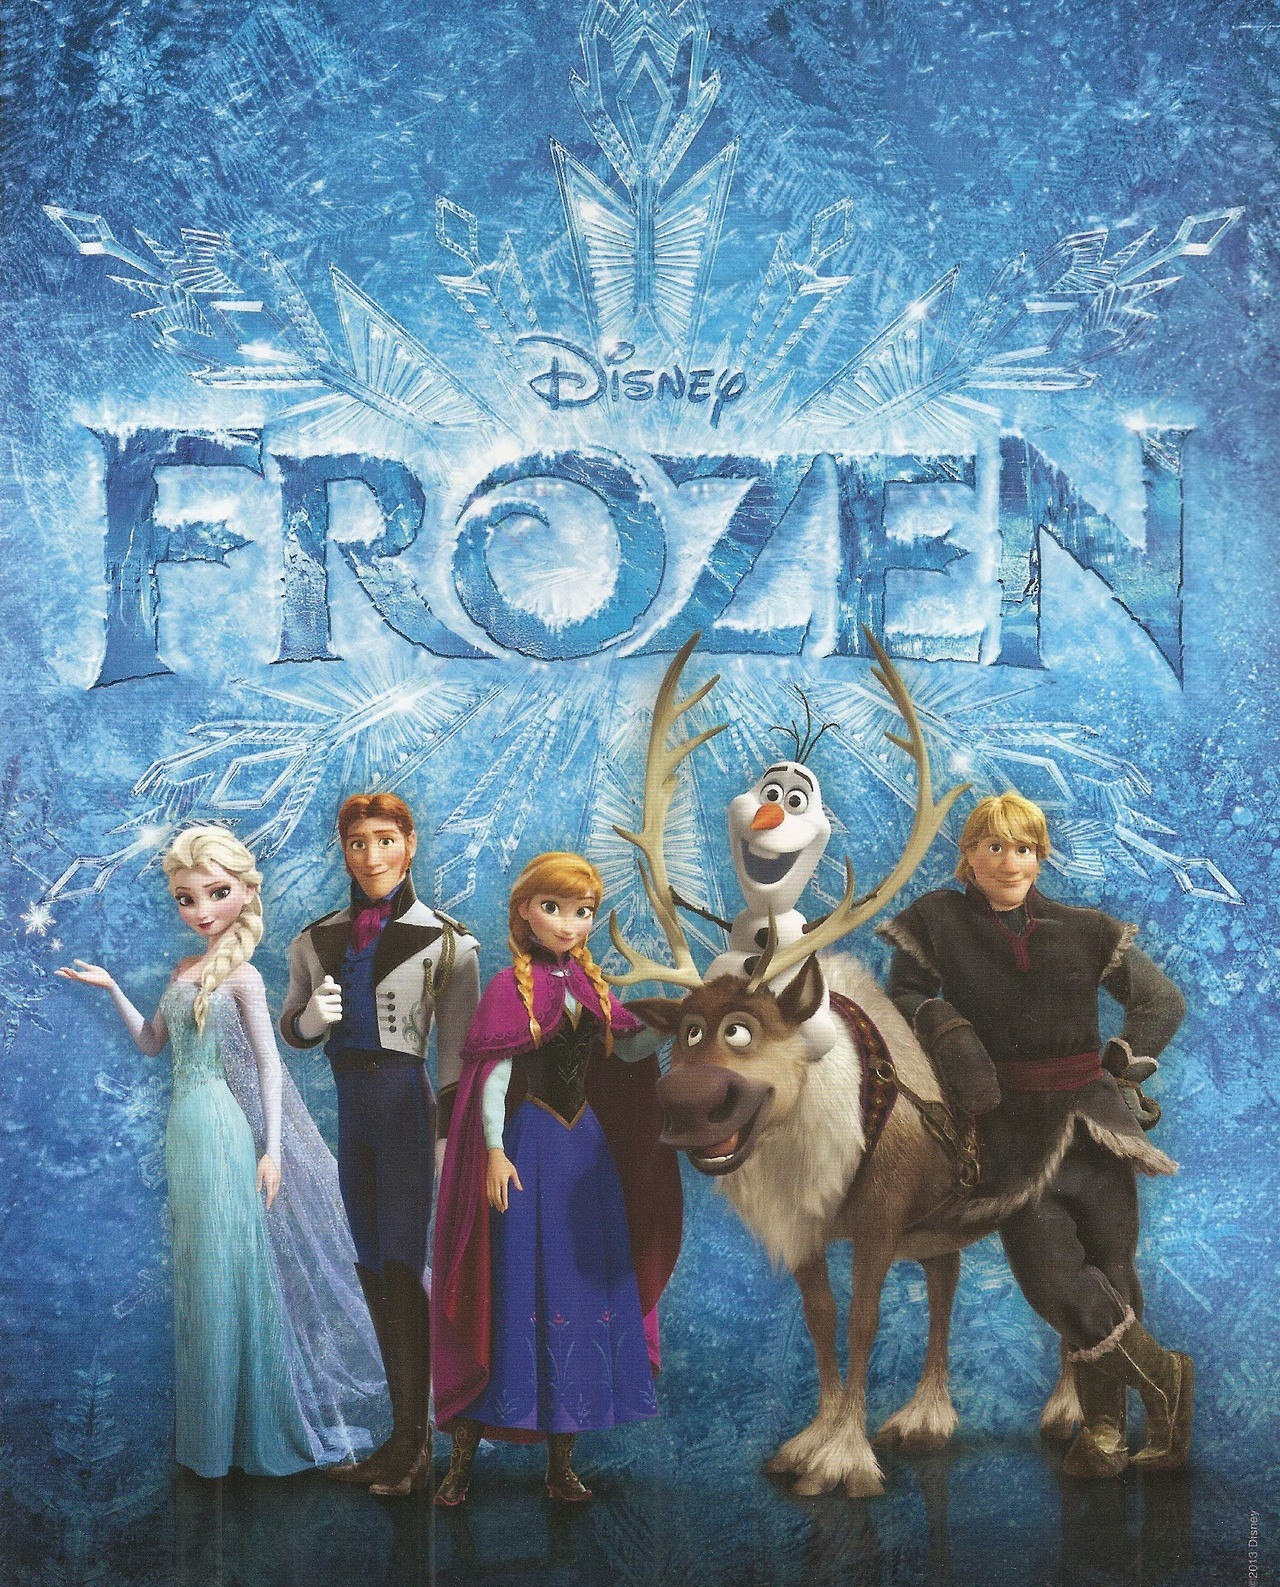 Phim “Frozen” bi cao buoc ngam truyen ba “van de dong tinh” cho tre em